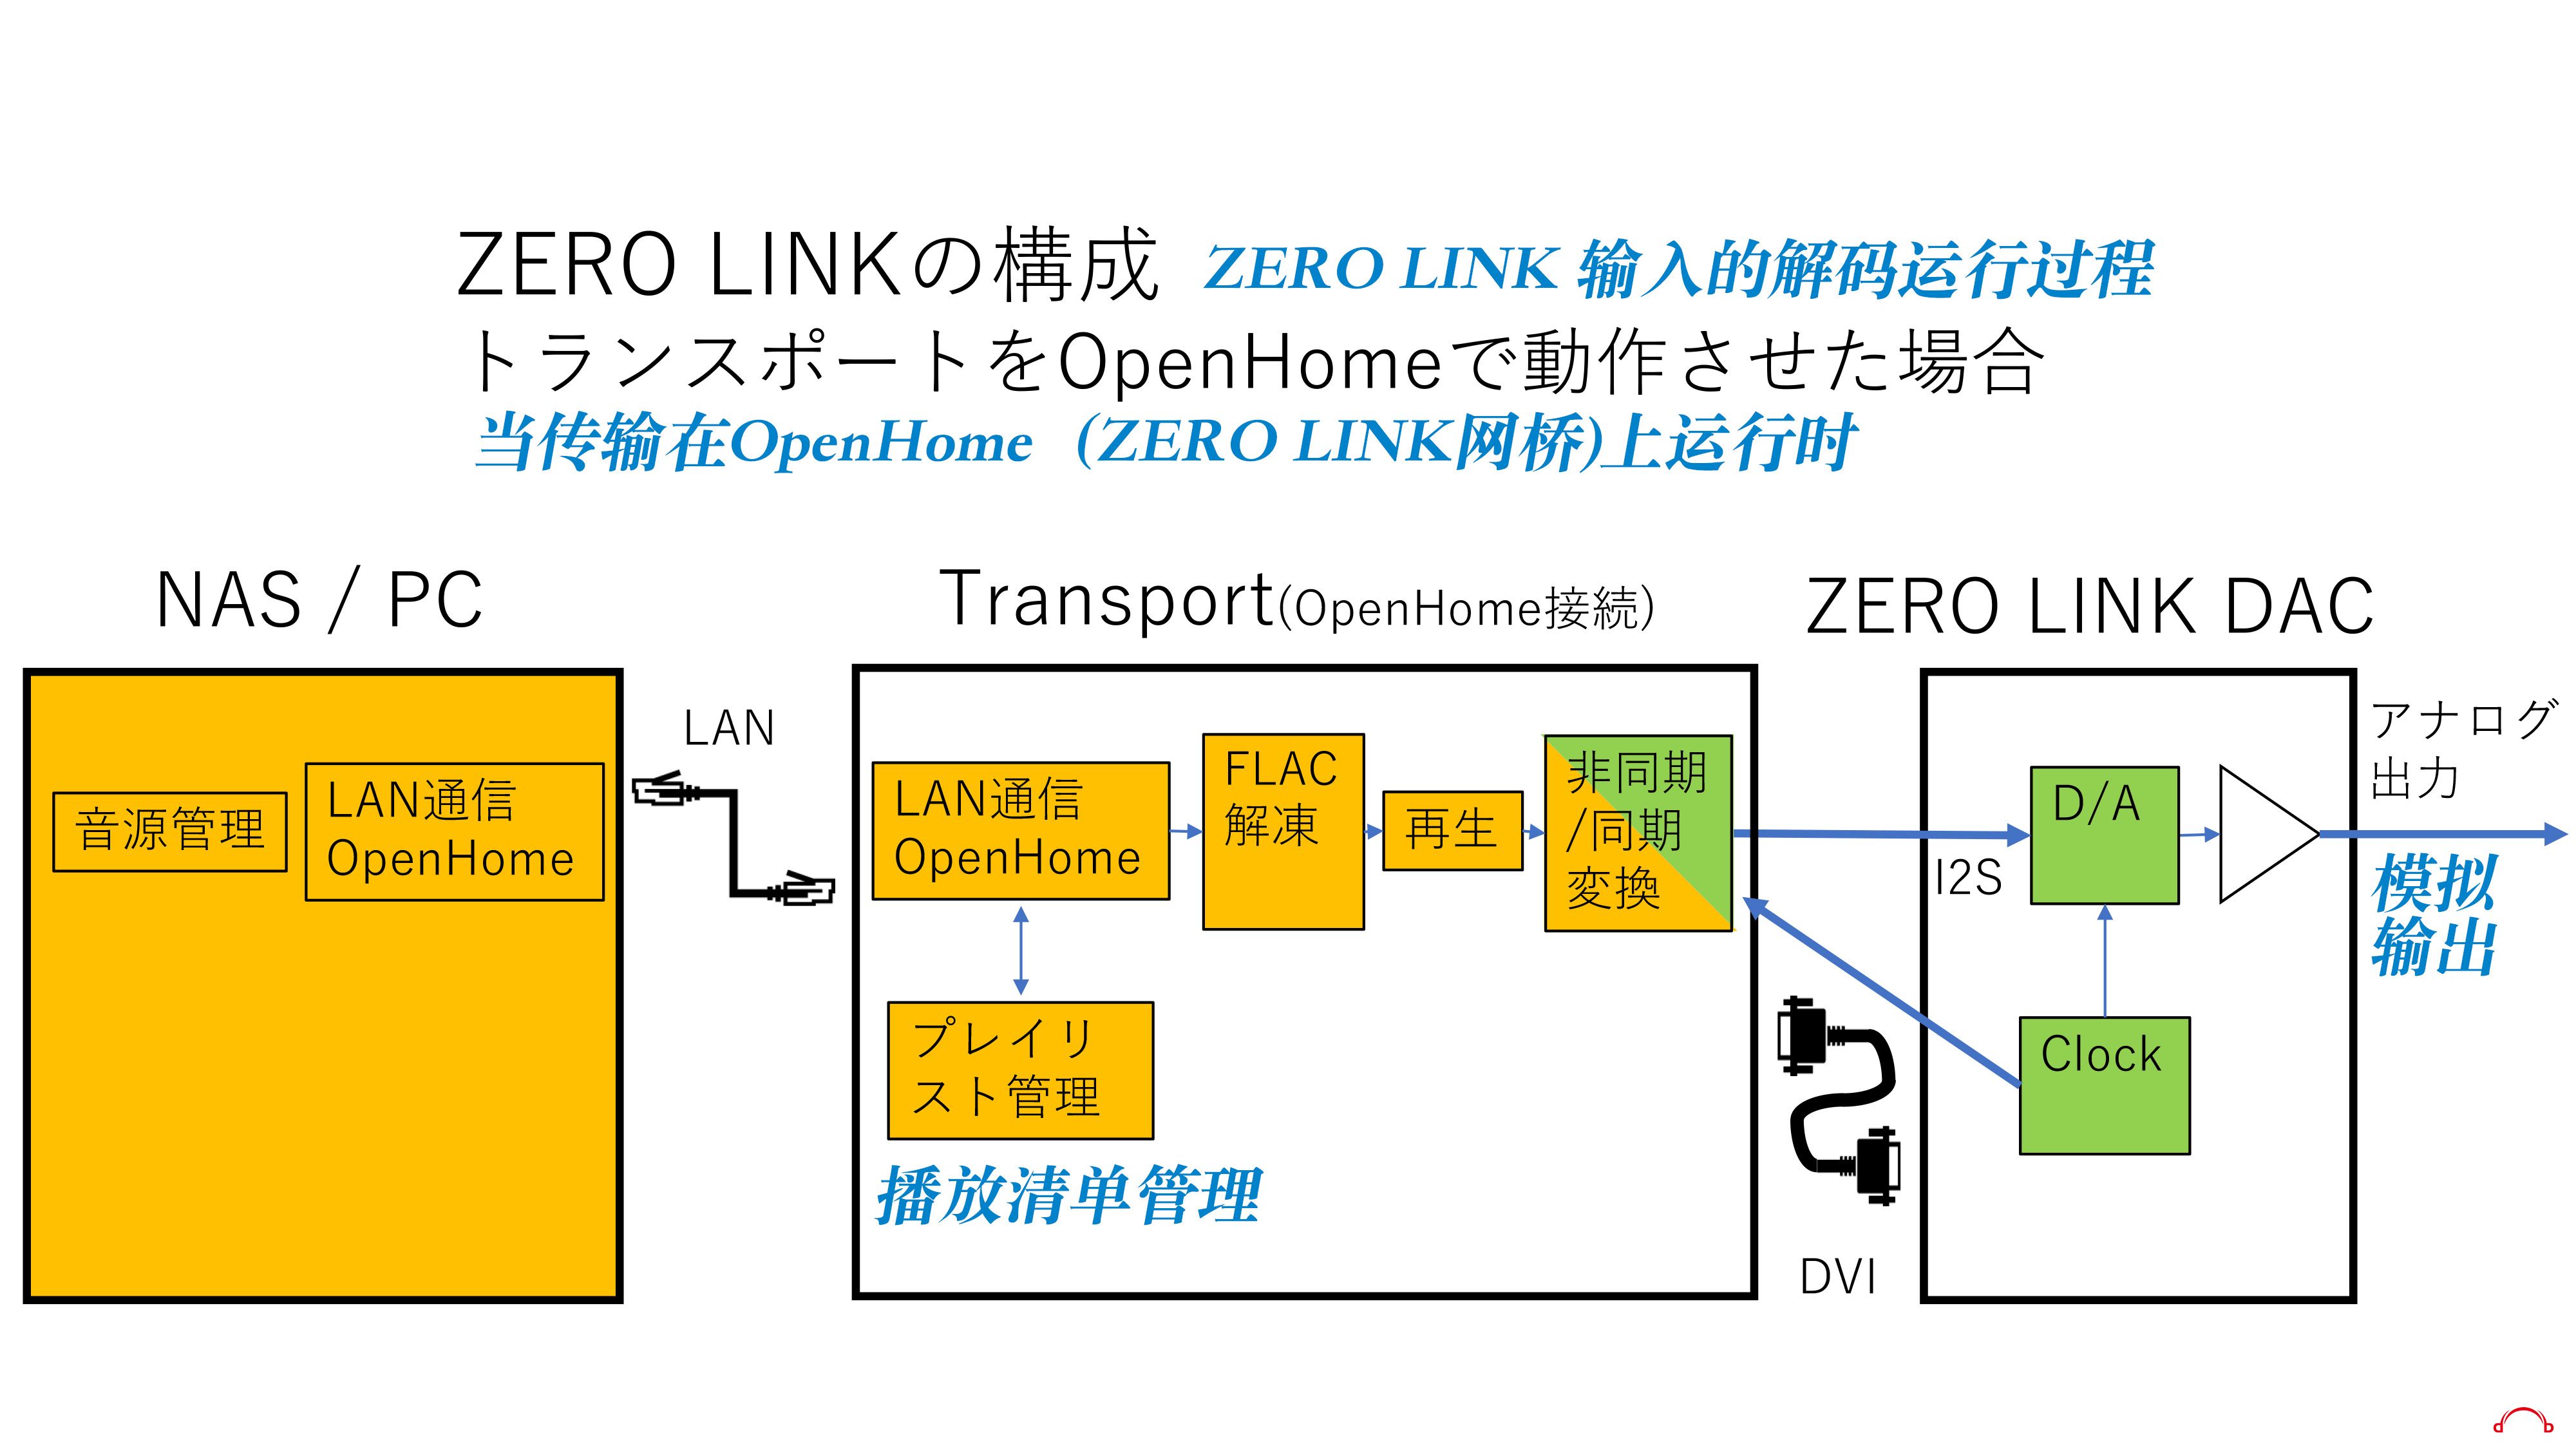 zerolink_info1-5.jpg